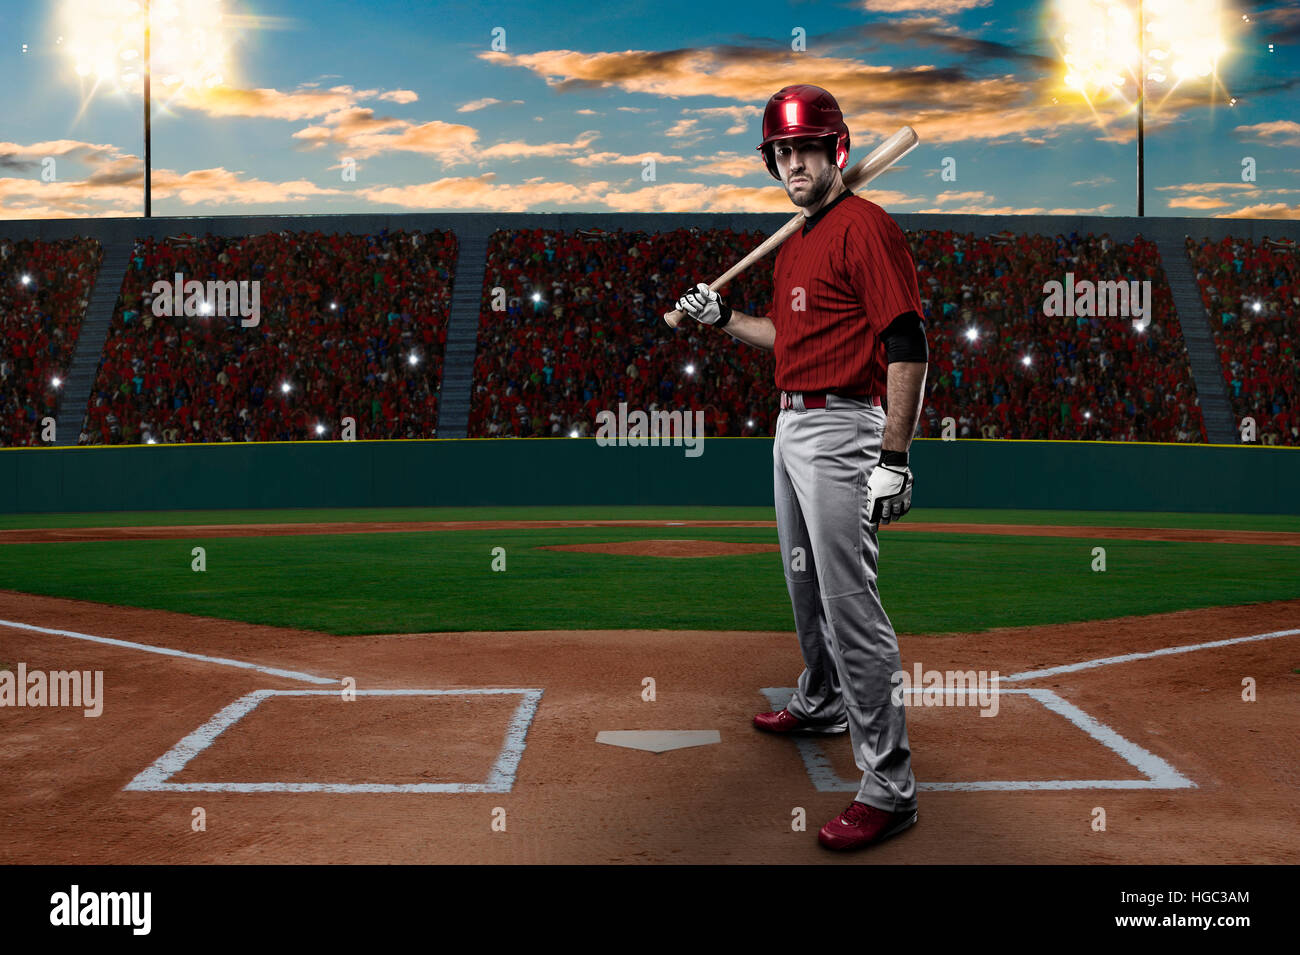 Baseball Player with a red uniform on baseball Stadium. Stock Photo